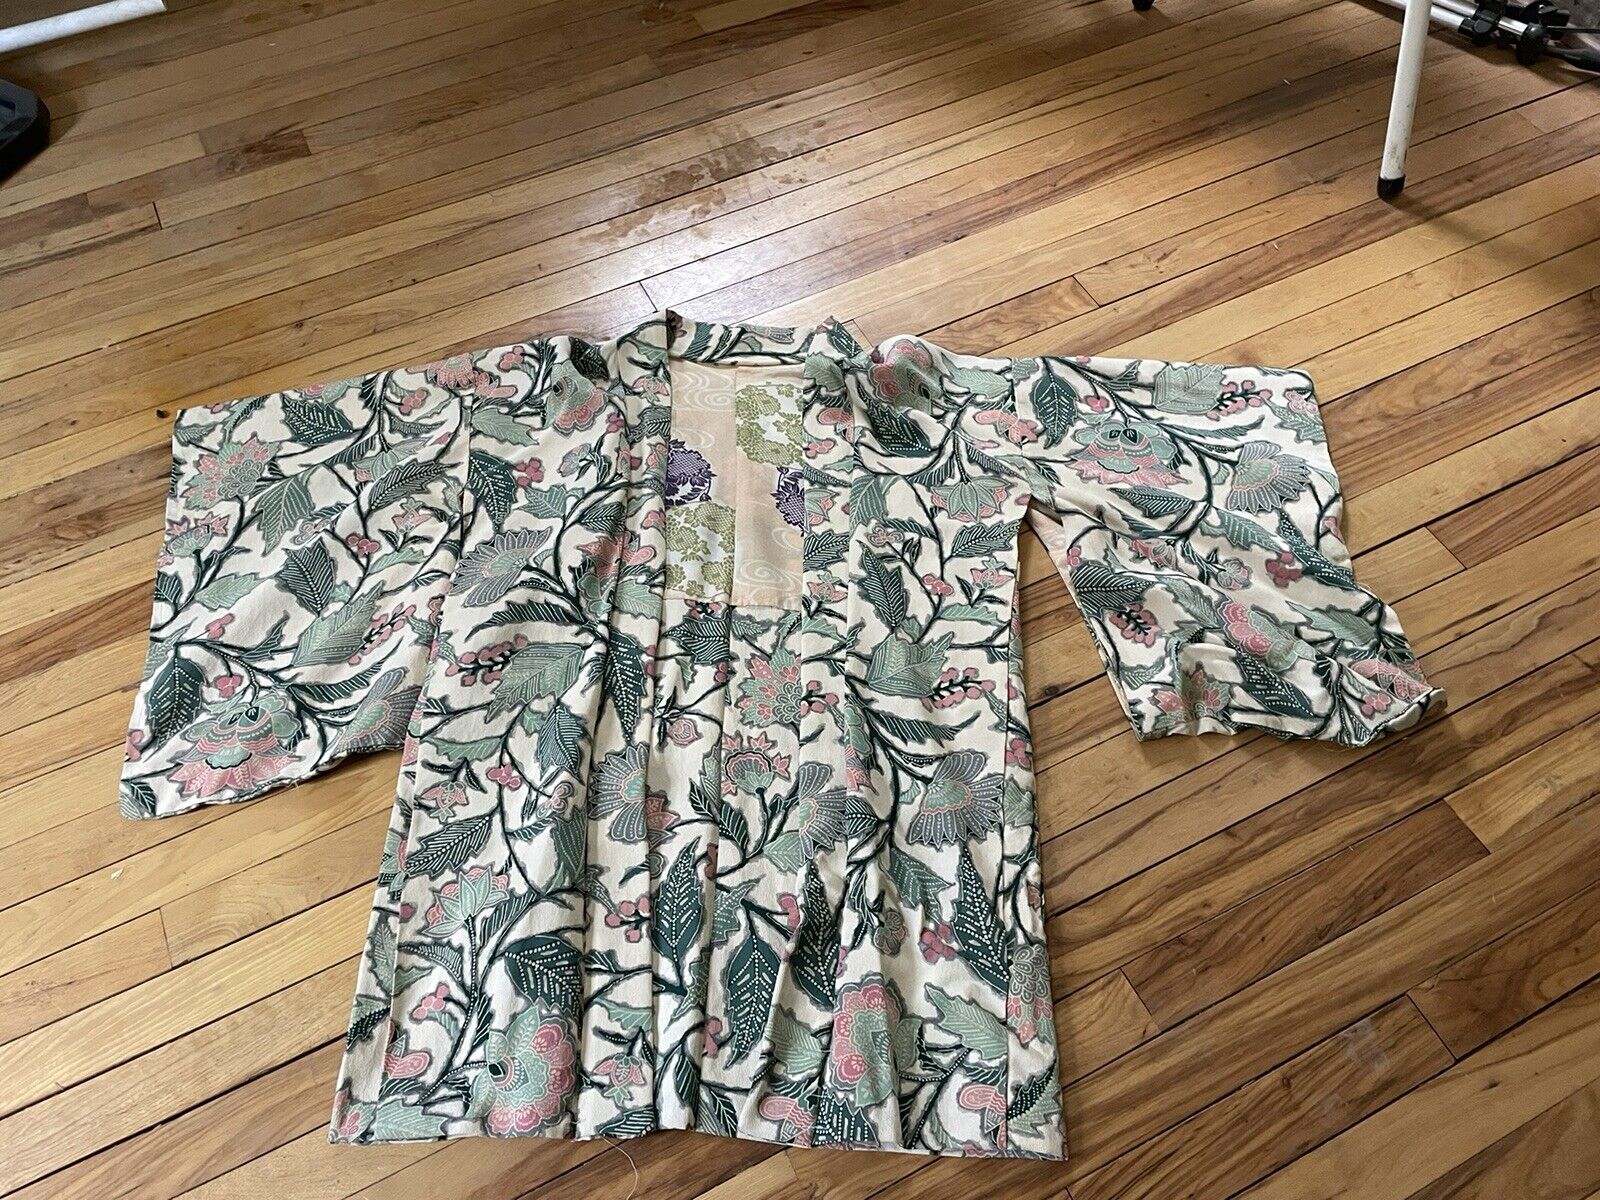 Vintage or Antique Silk Haori short Kimono jacket, Mens ?, Looks unworn, clean.